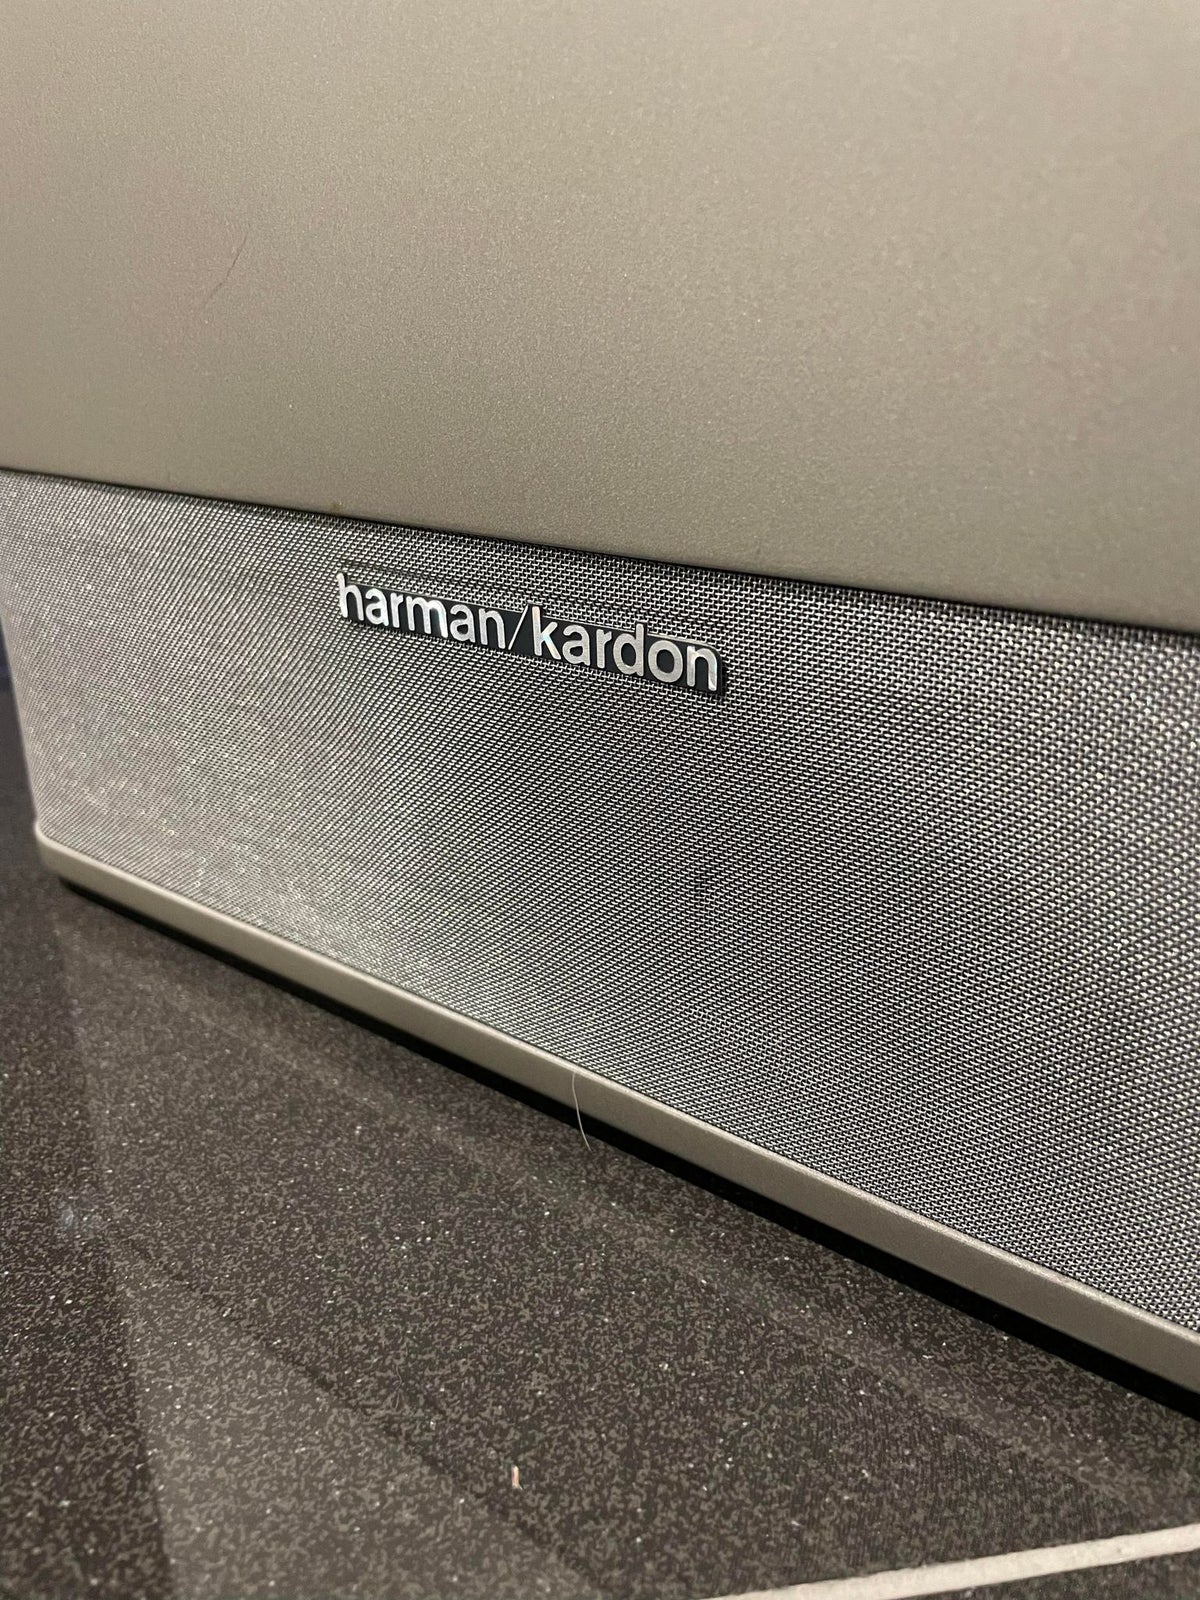 Subwoofer, Harman Kardon, TS7/230